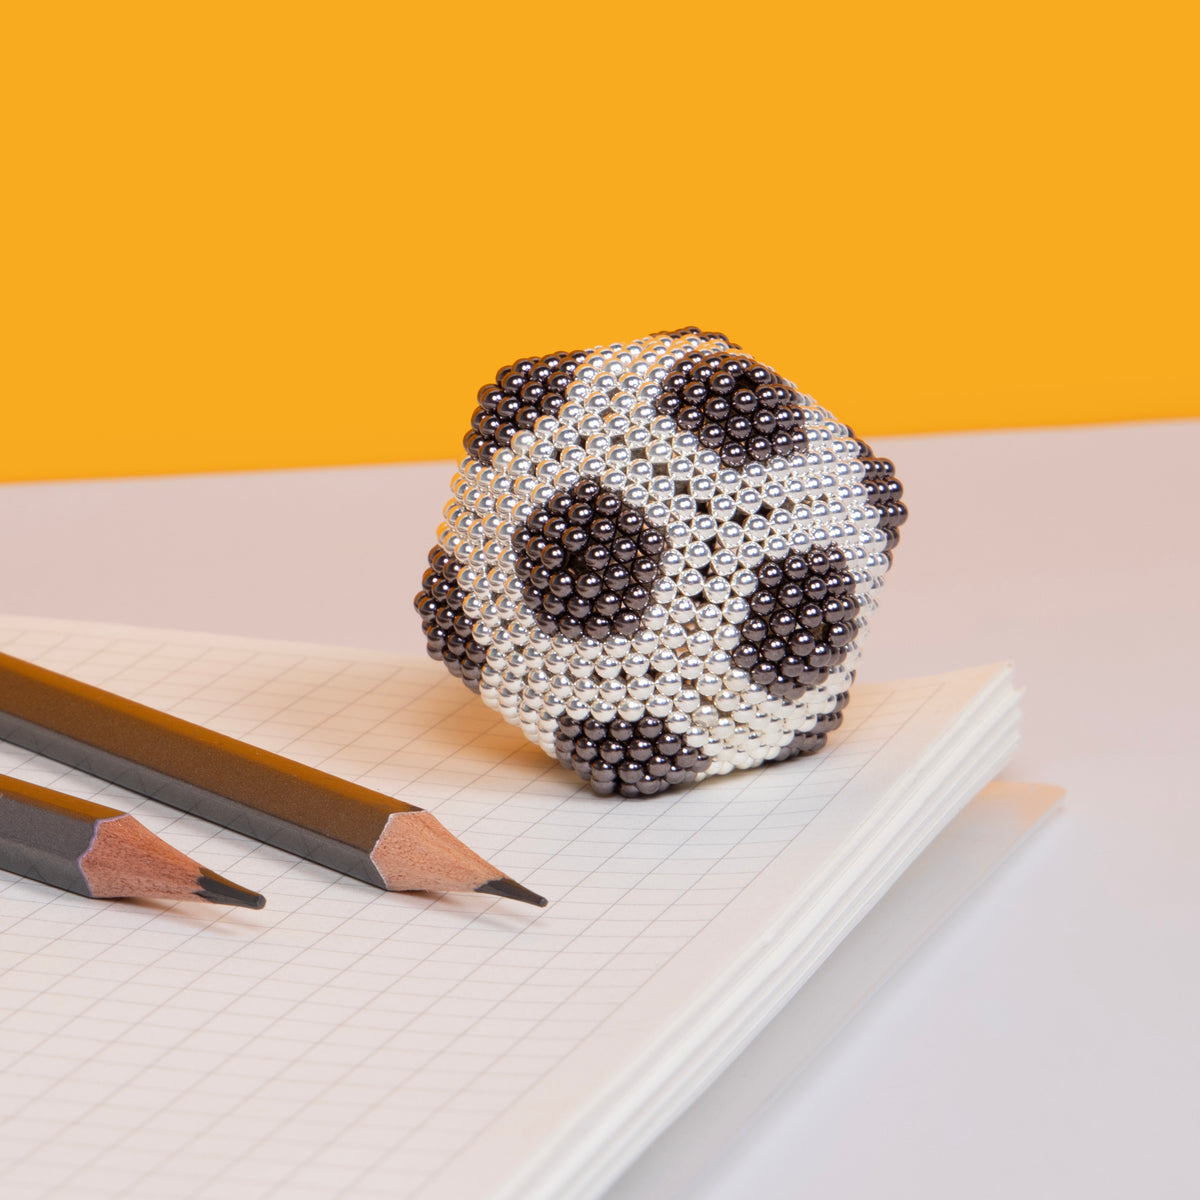 Speks 1000 - Duotone 2.5mm Magnet Balls Greyscale